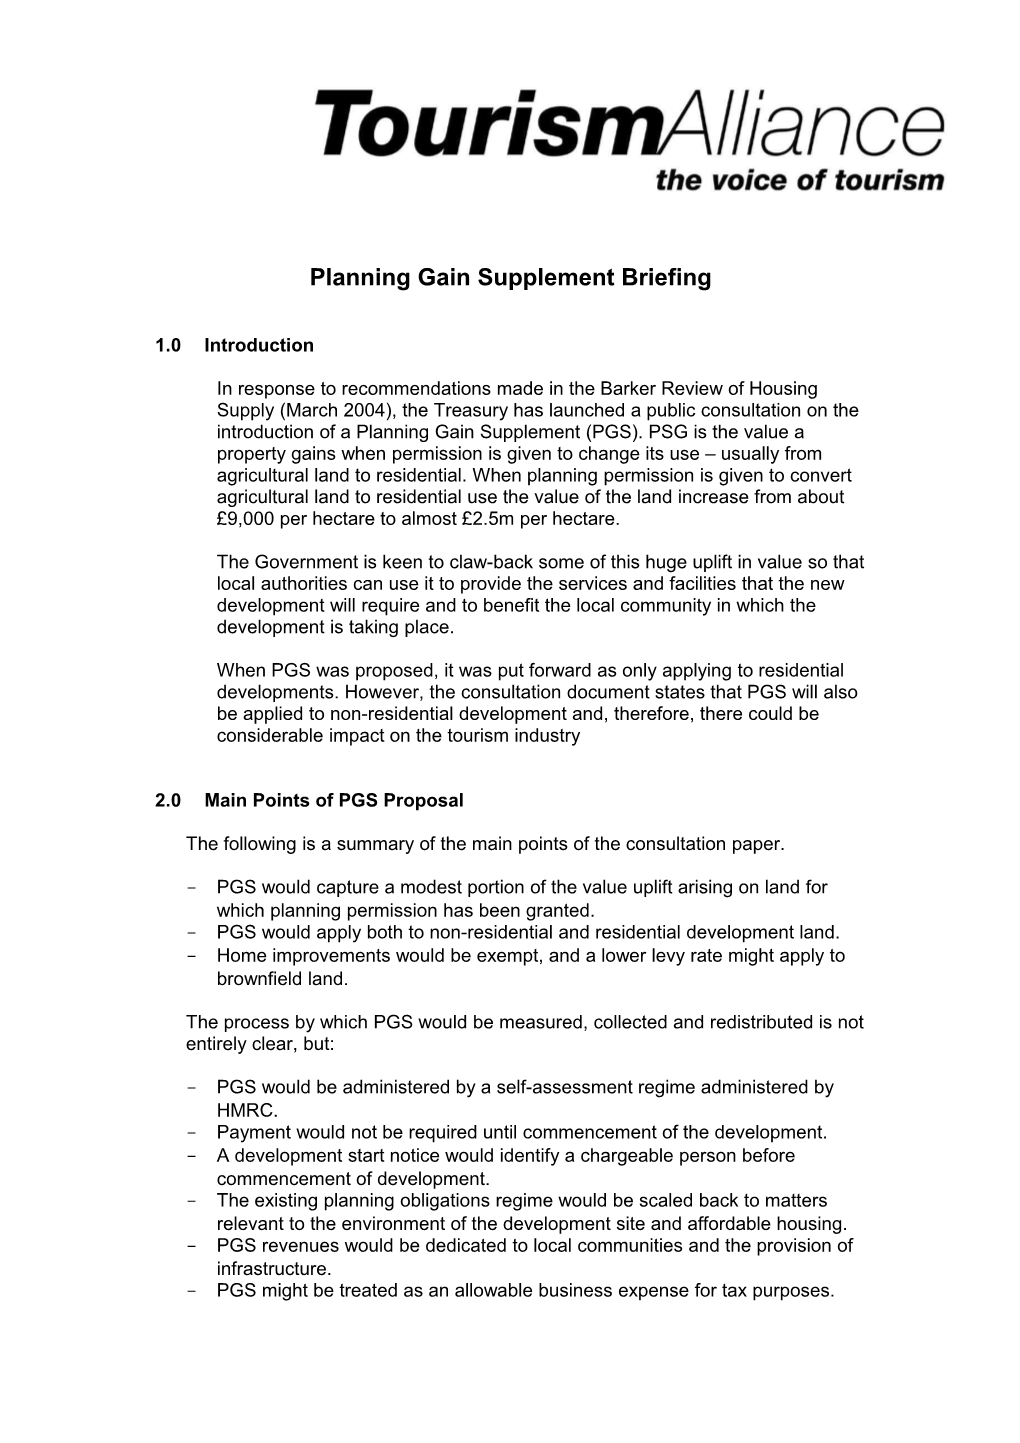 Planning Gain Supplement an HMT Consultation